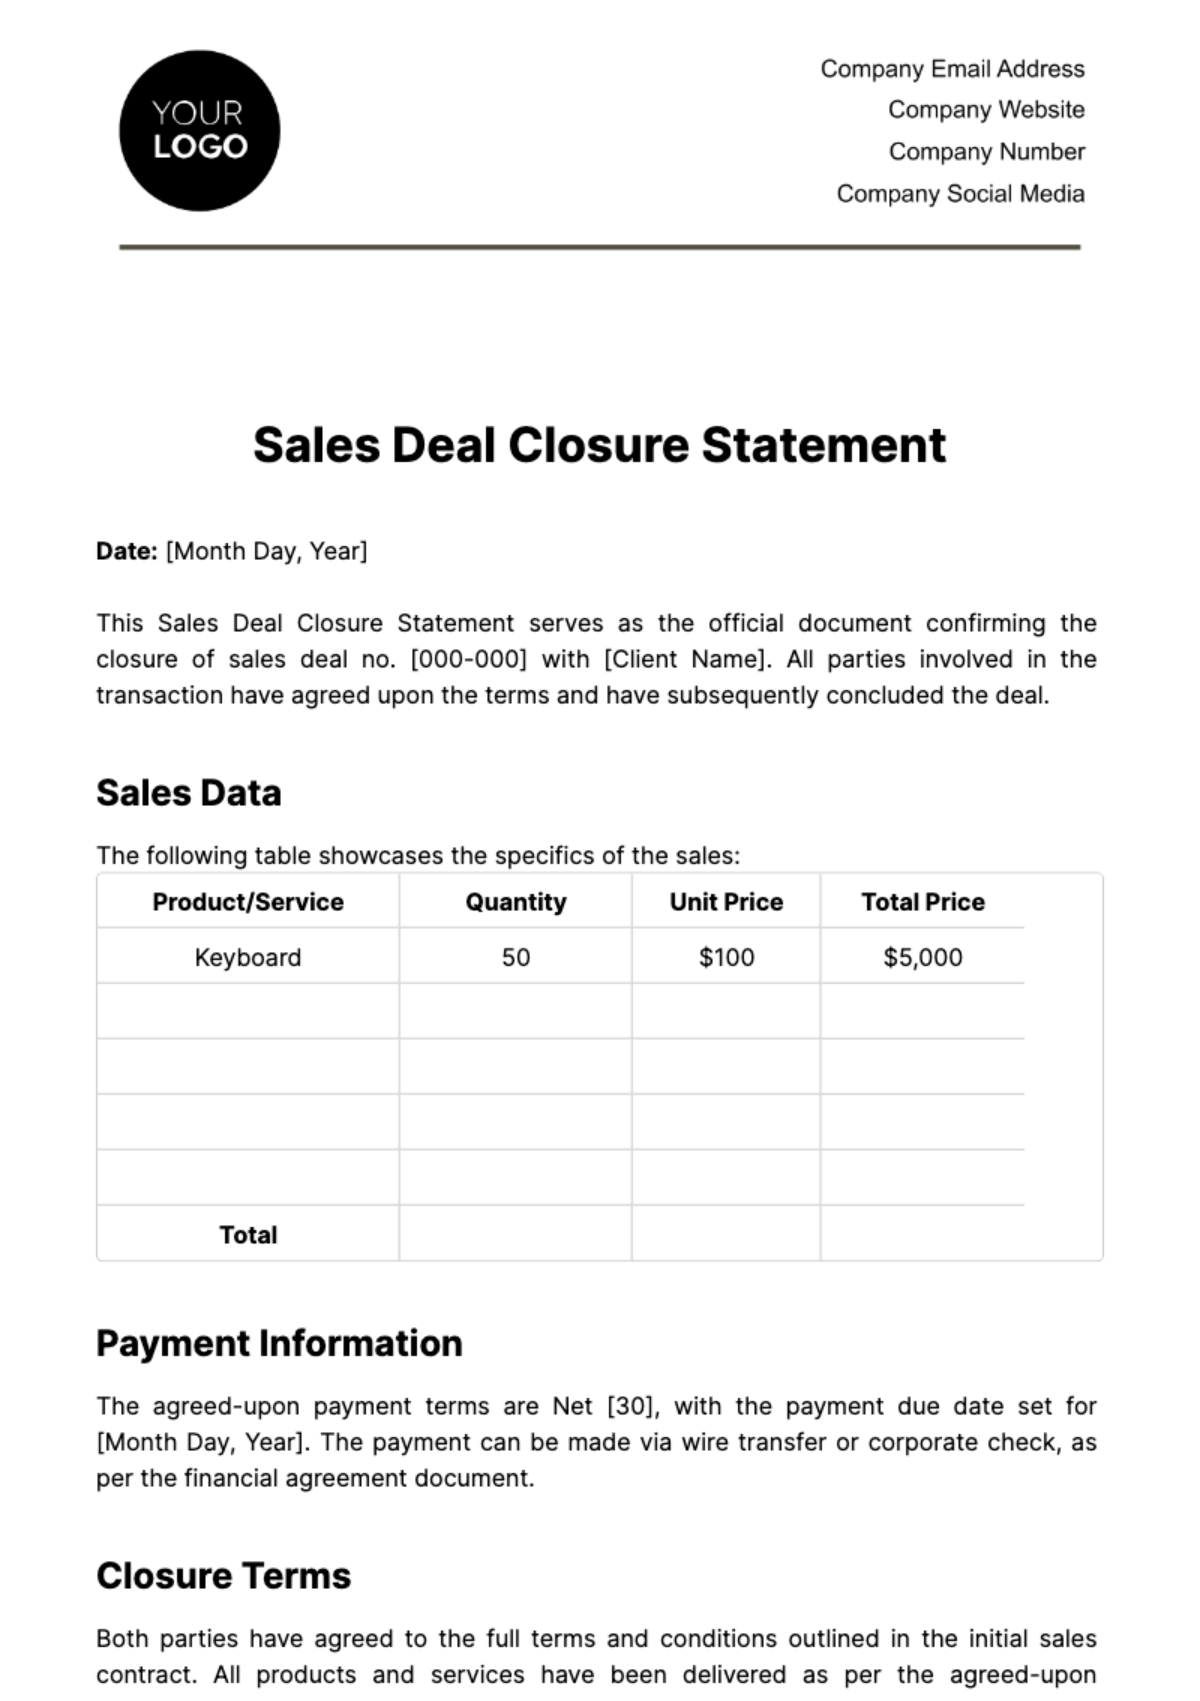 Sales Deal Closure Statement Template